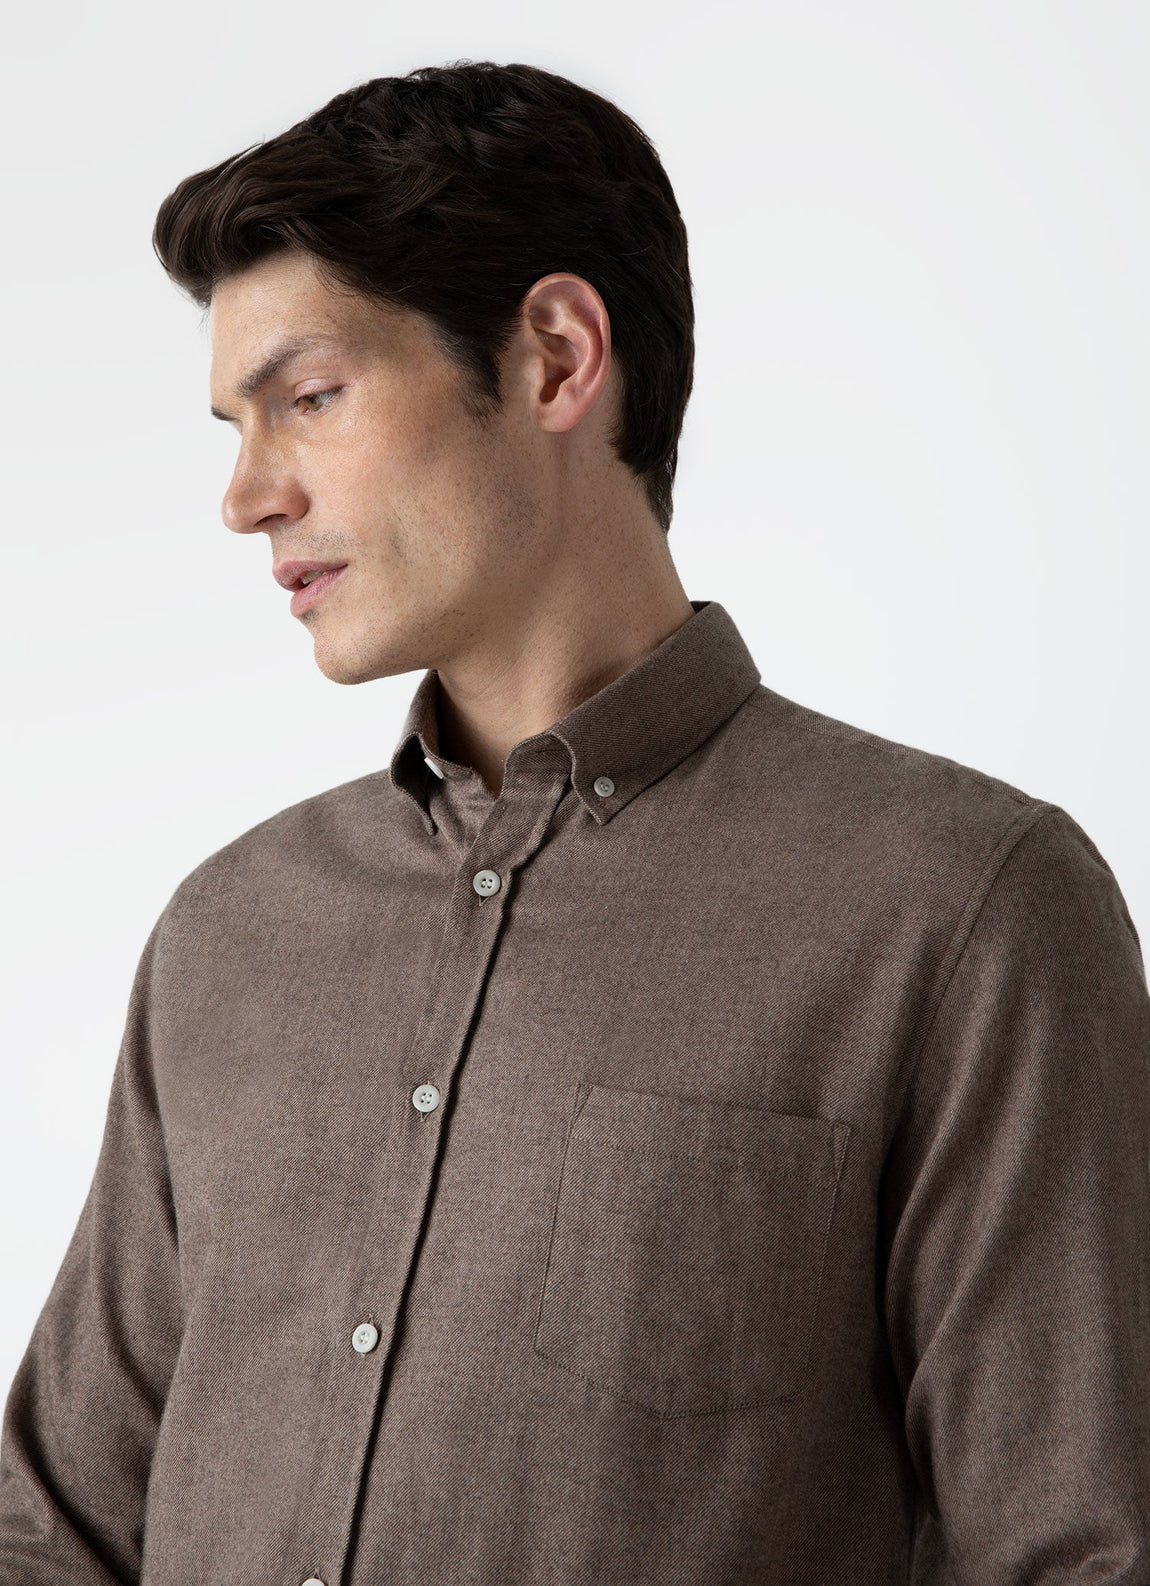 Men's Button Down Flannel Shirt in Cedar